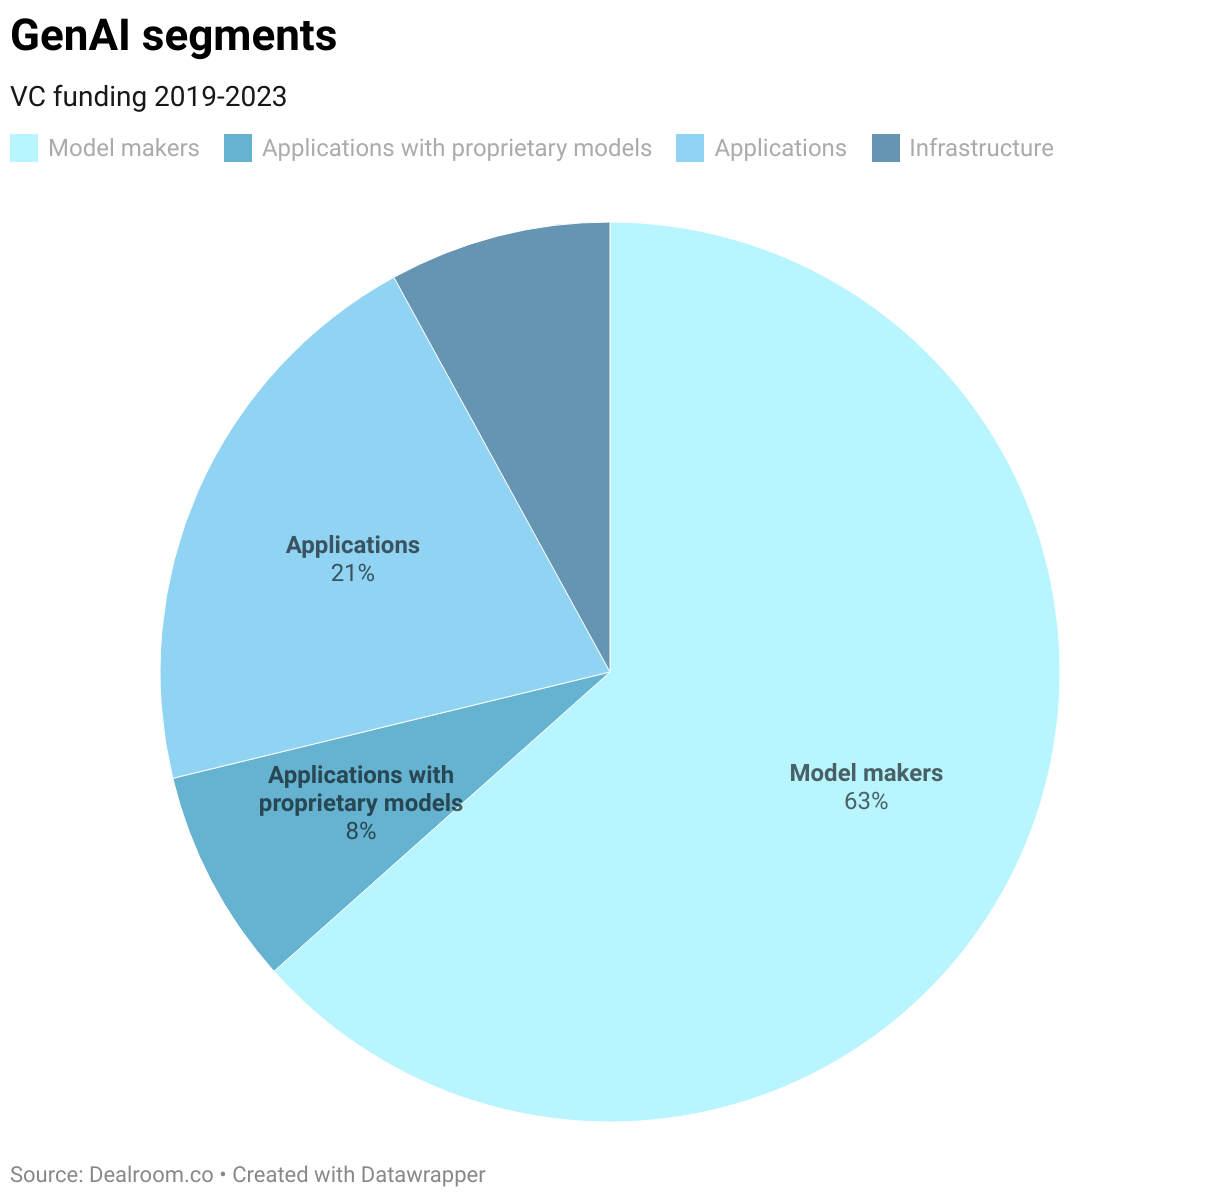 Pie chart of the three biggest GenAI segments